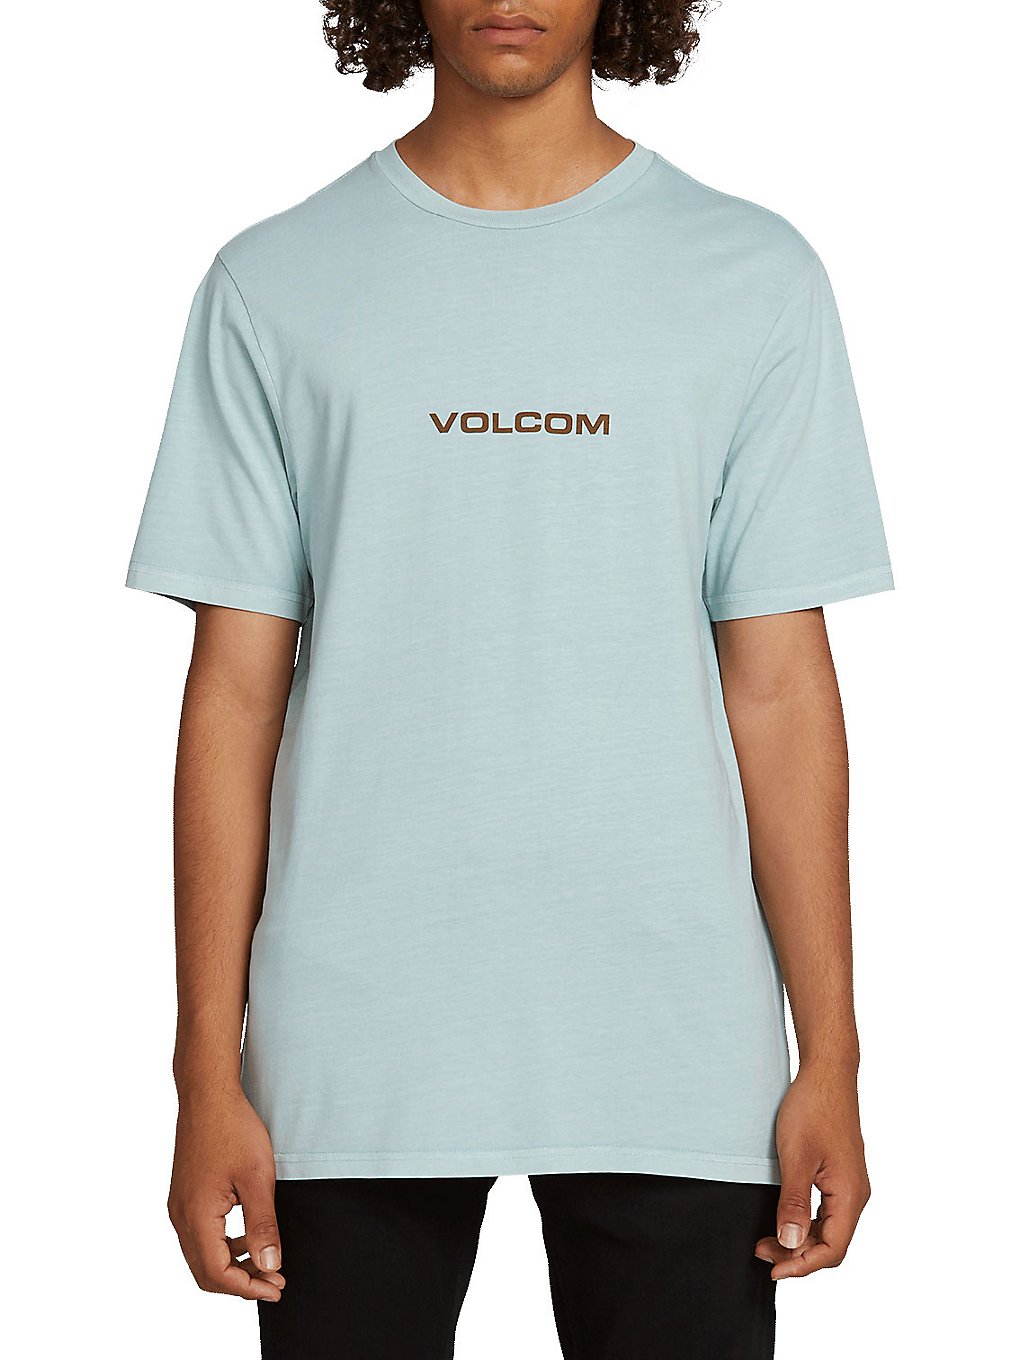 Volcom little europe t-shirt sininen, volcom